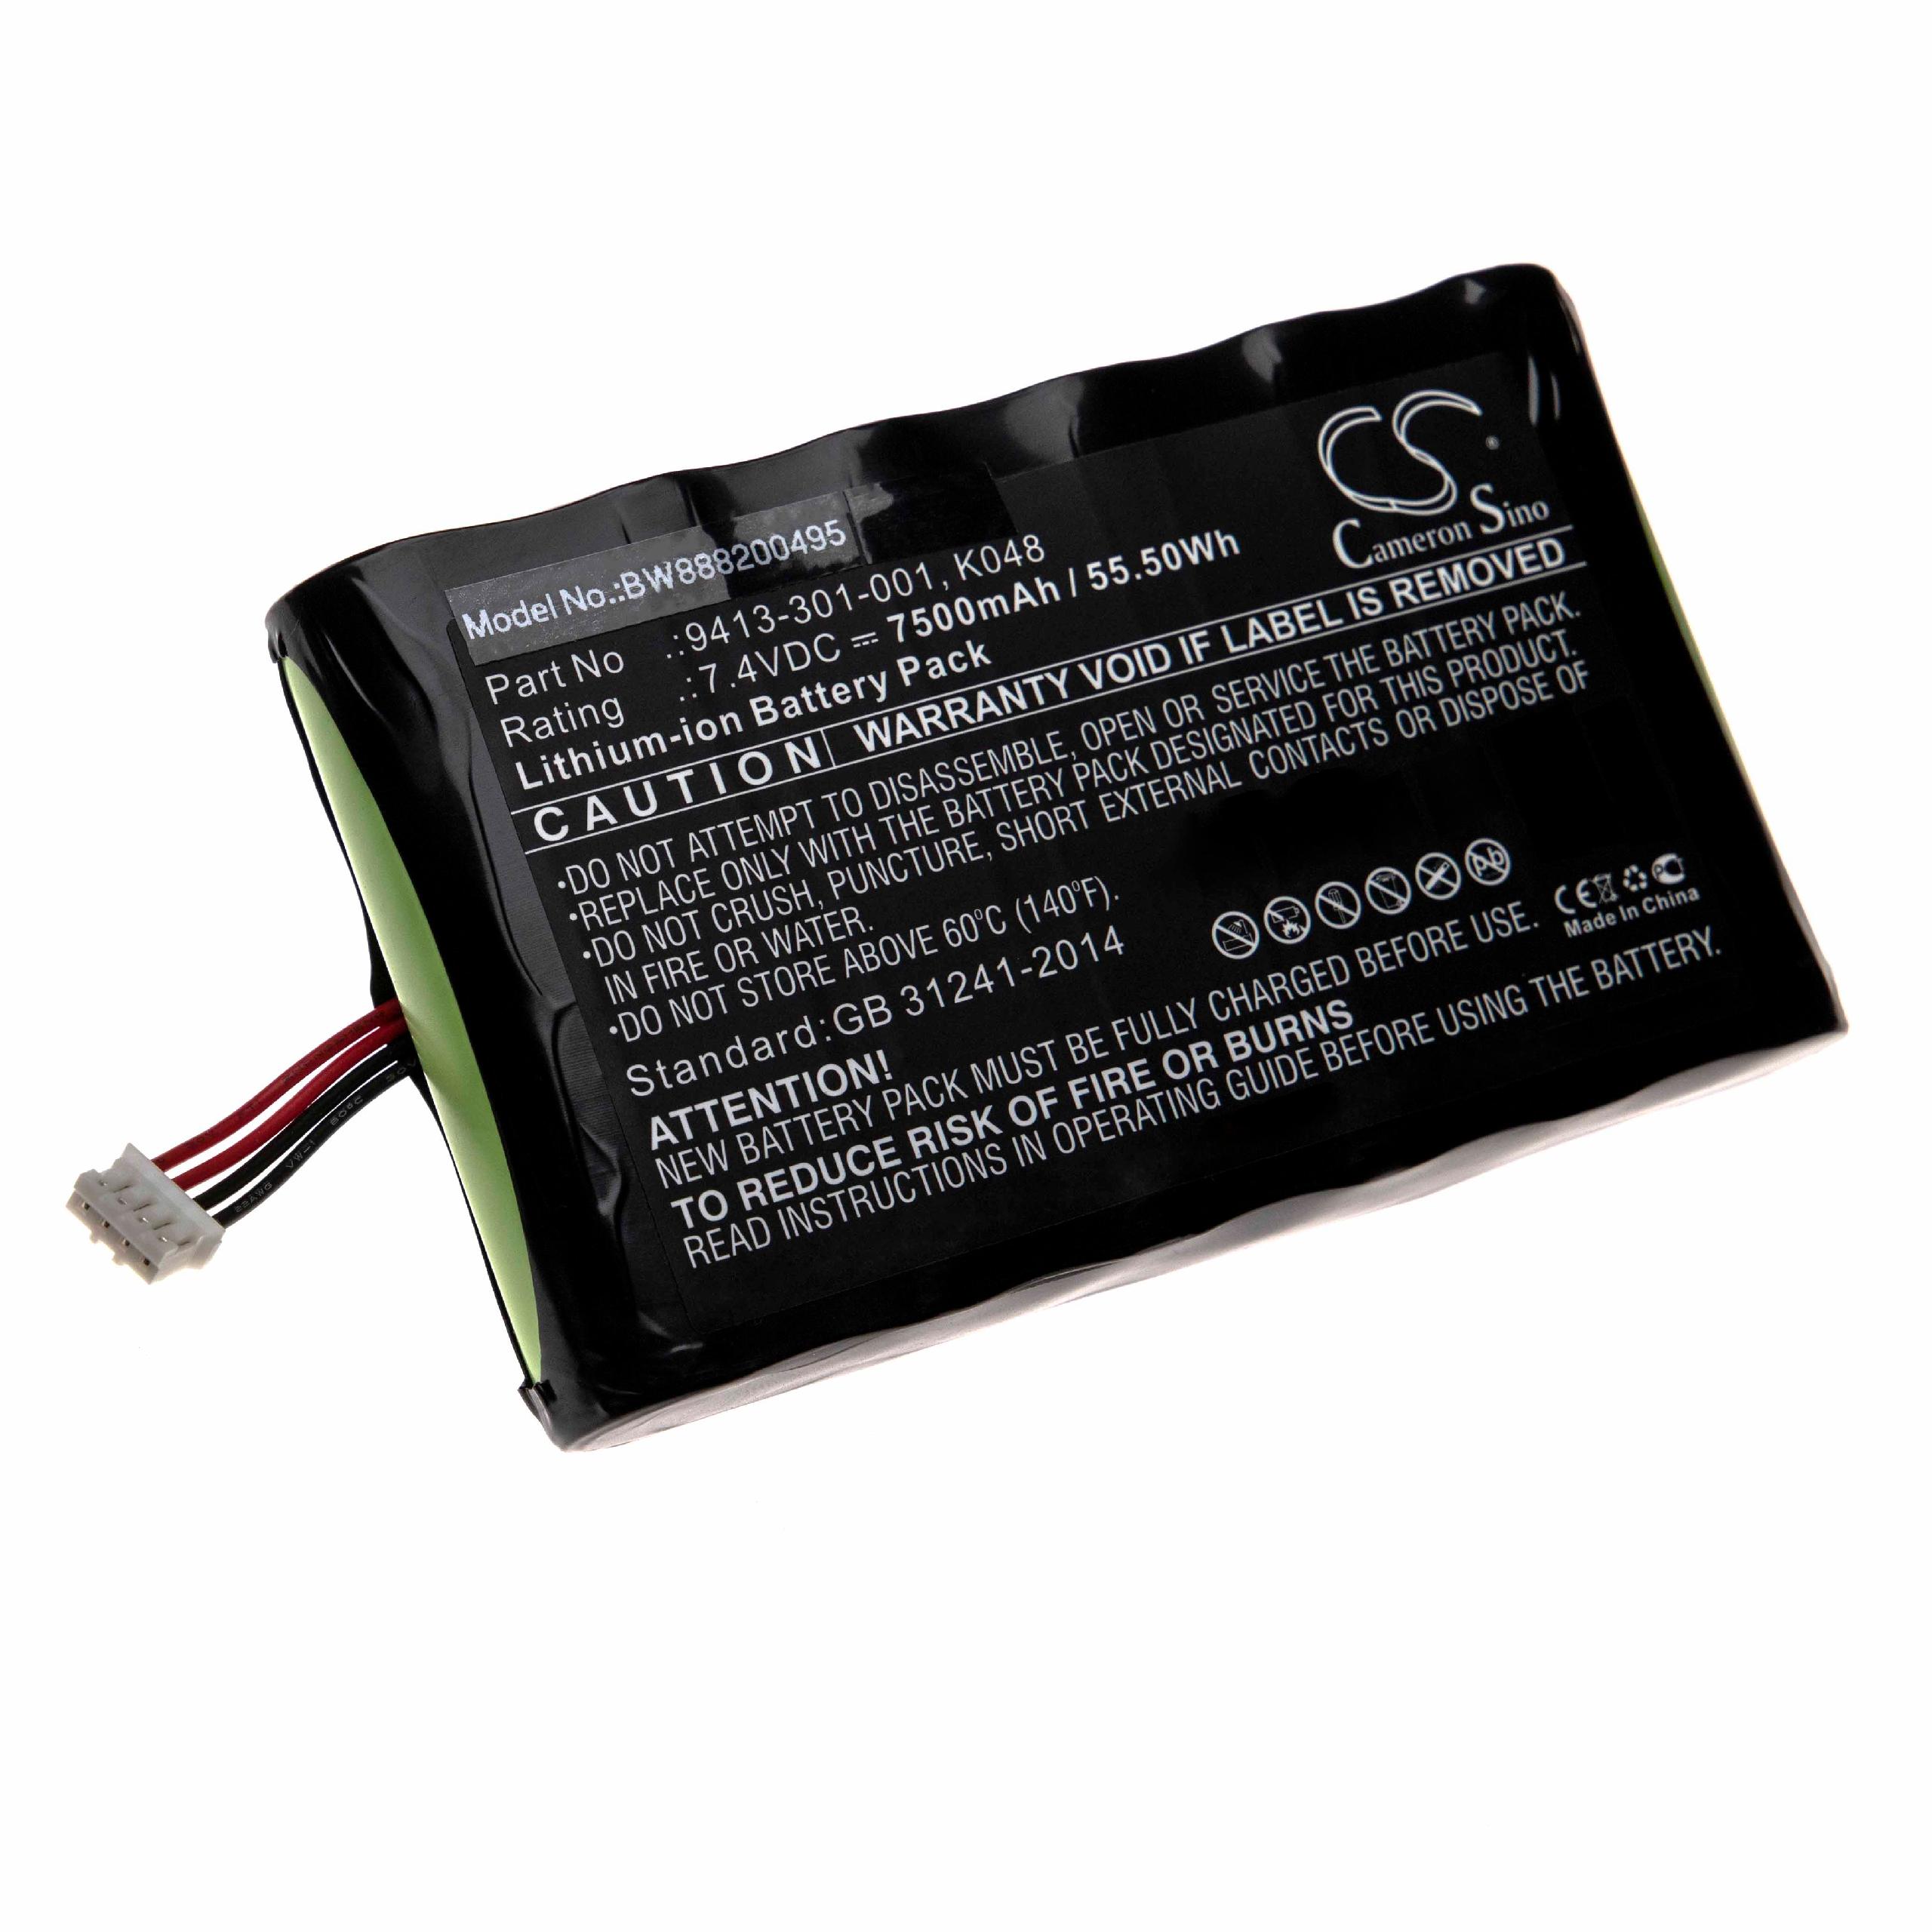 Batería reemplaza Peli K048, 9413-301-001 para linterna 